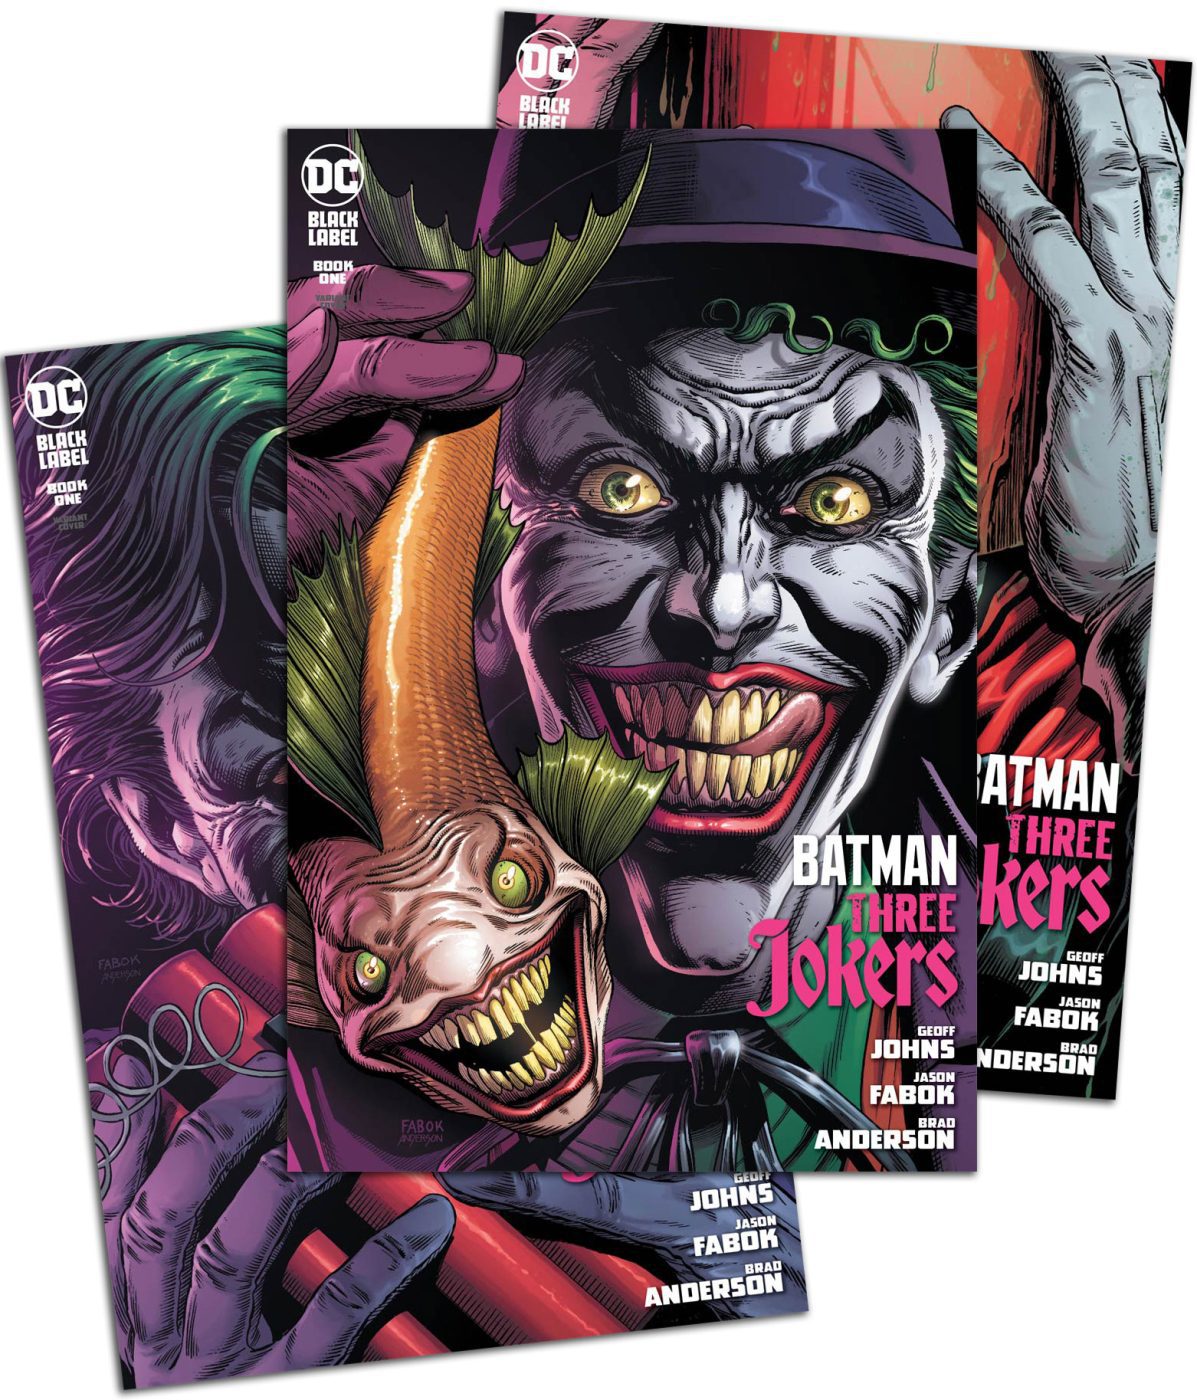 3x BATMAN THREE JOKERS #1 Premium Variant Covers